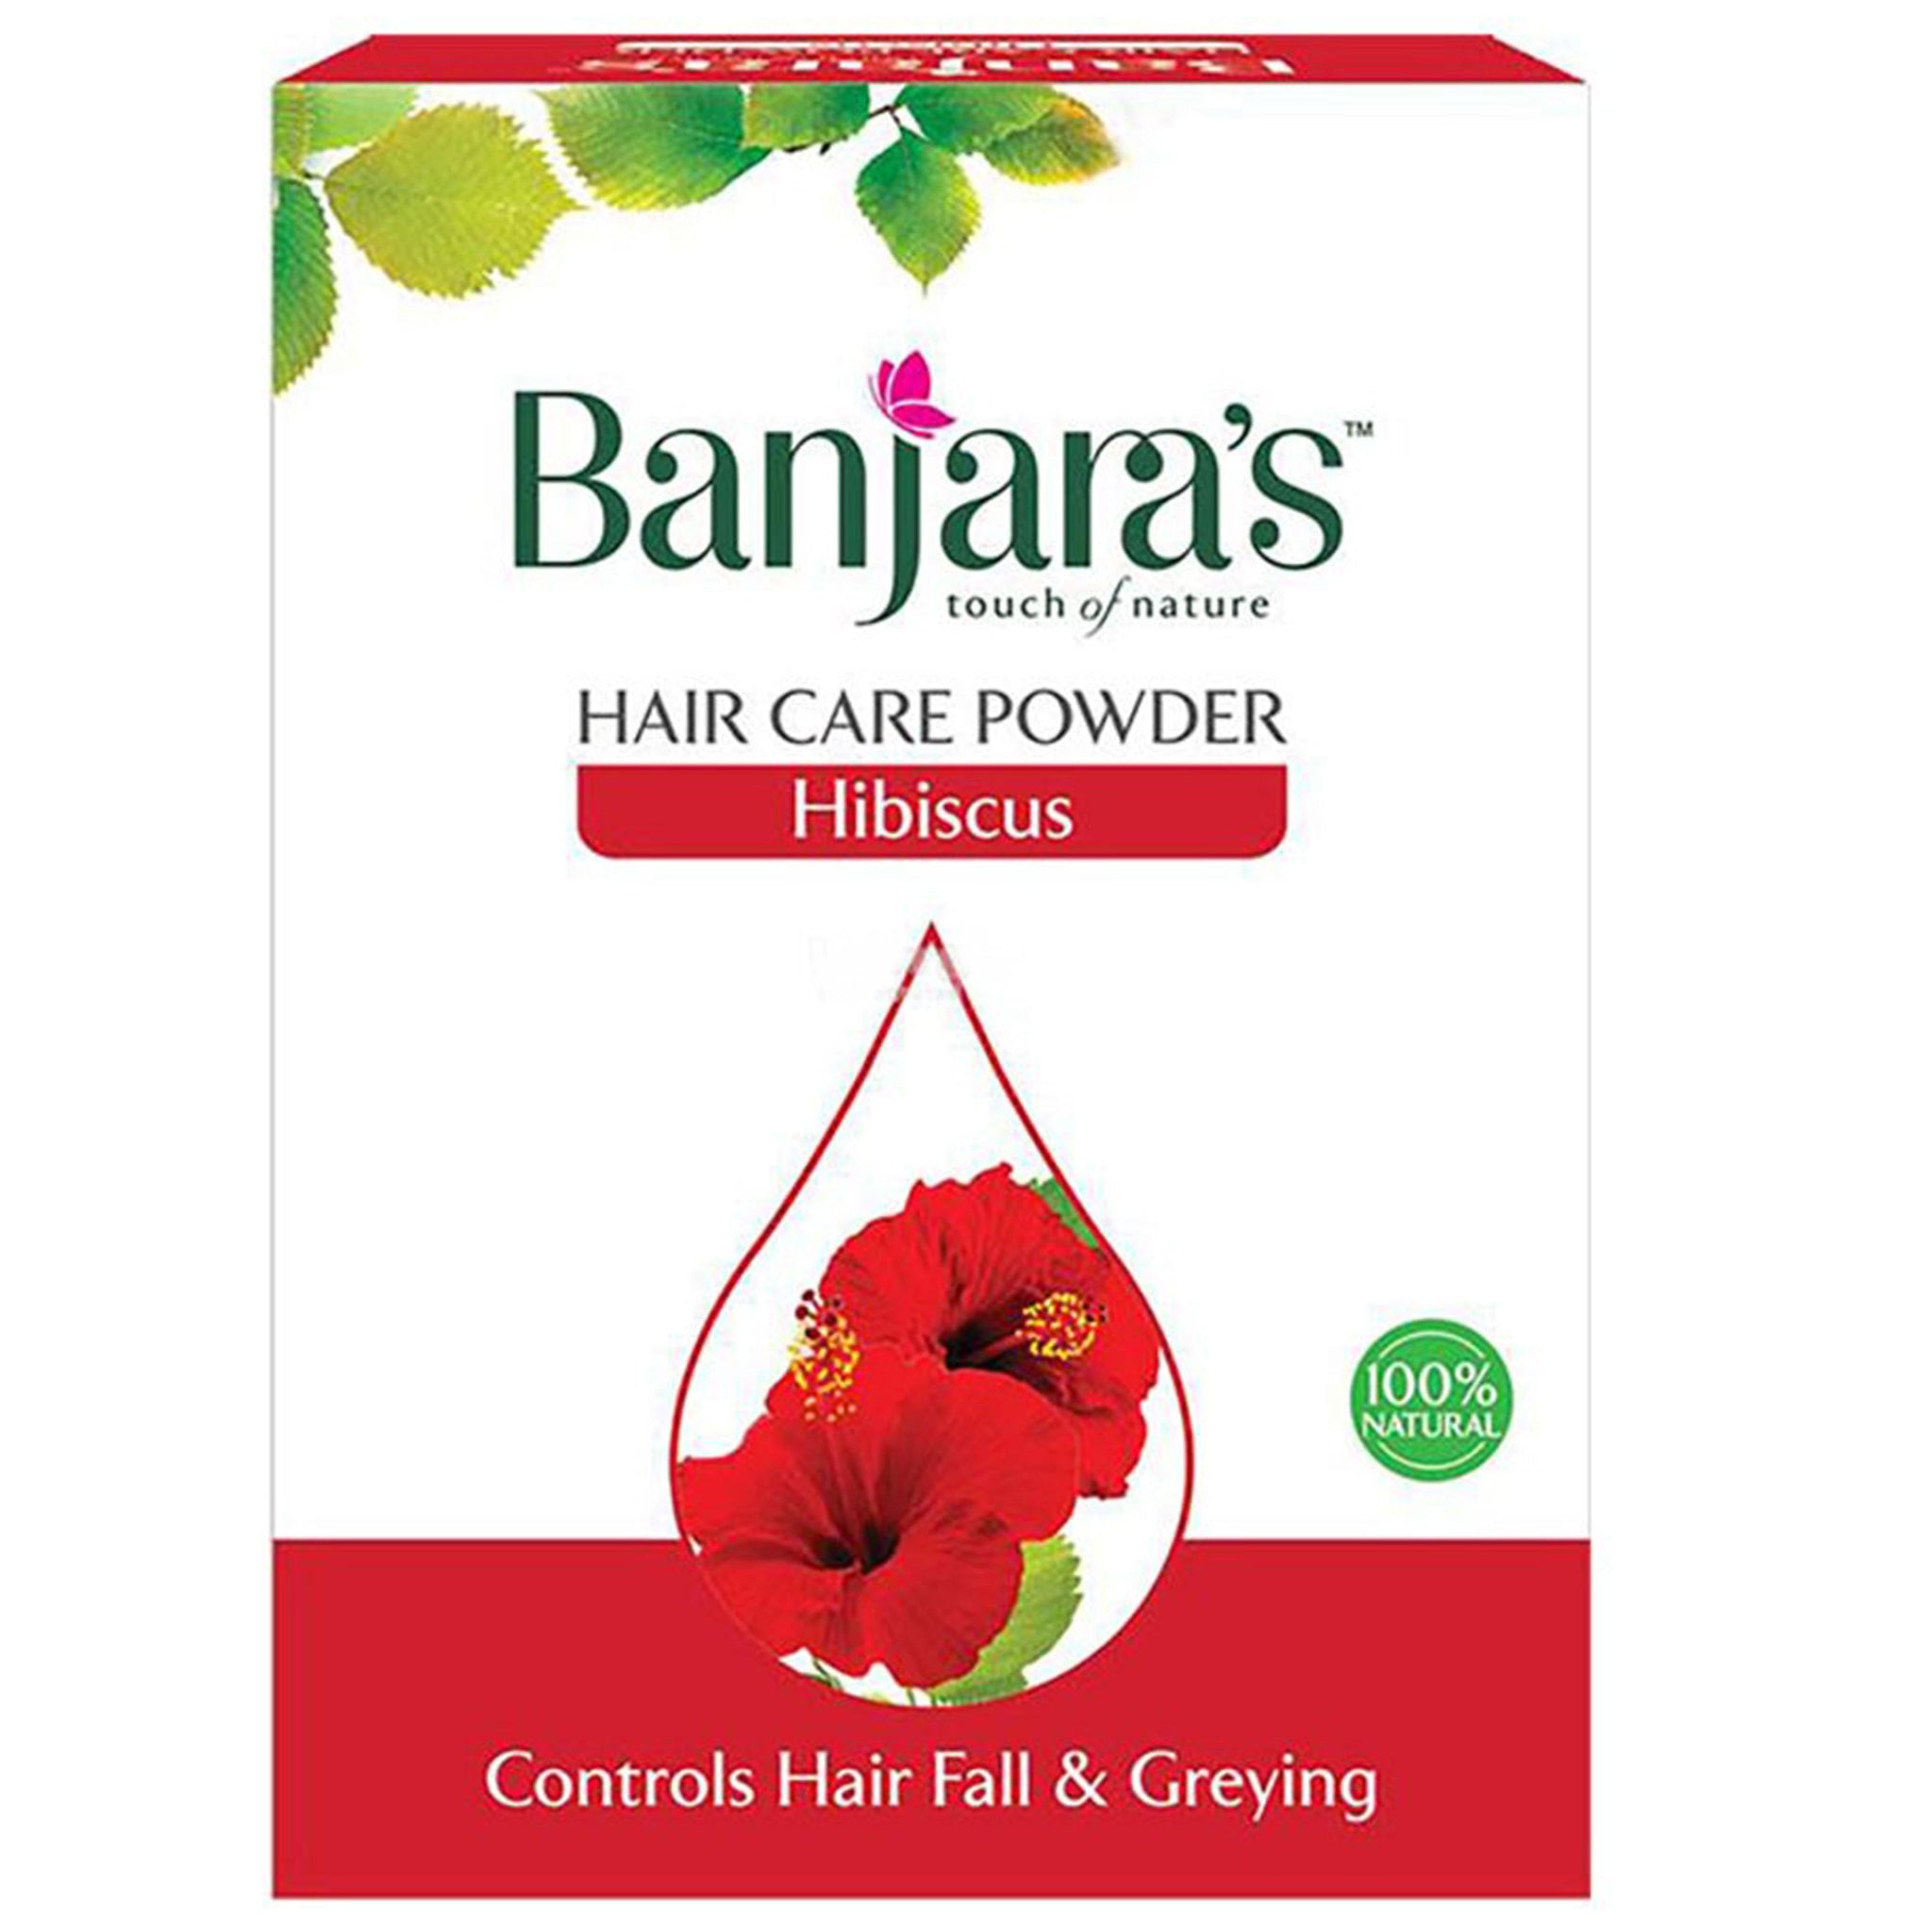 Banjaras Hibiscus Hair Care Powder 100g Value Pack of 2 